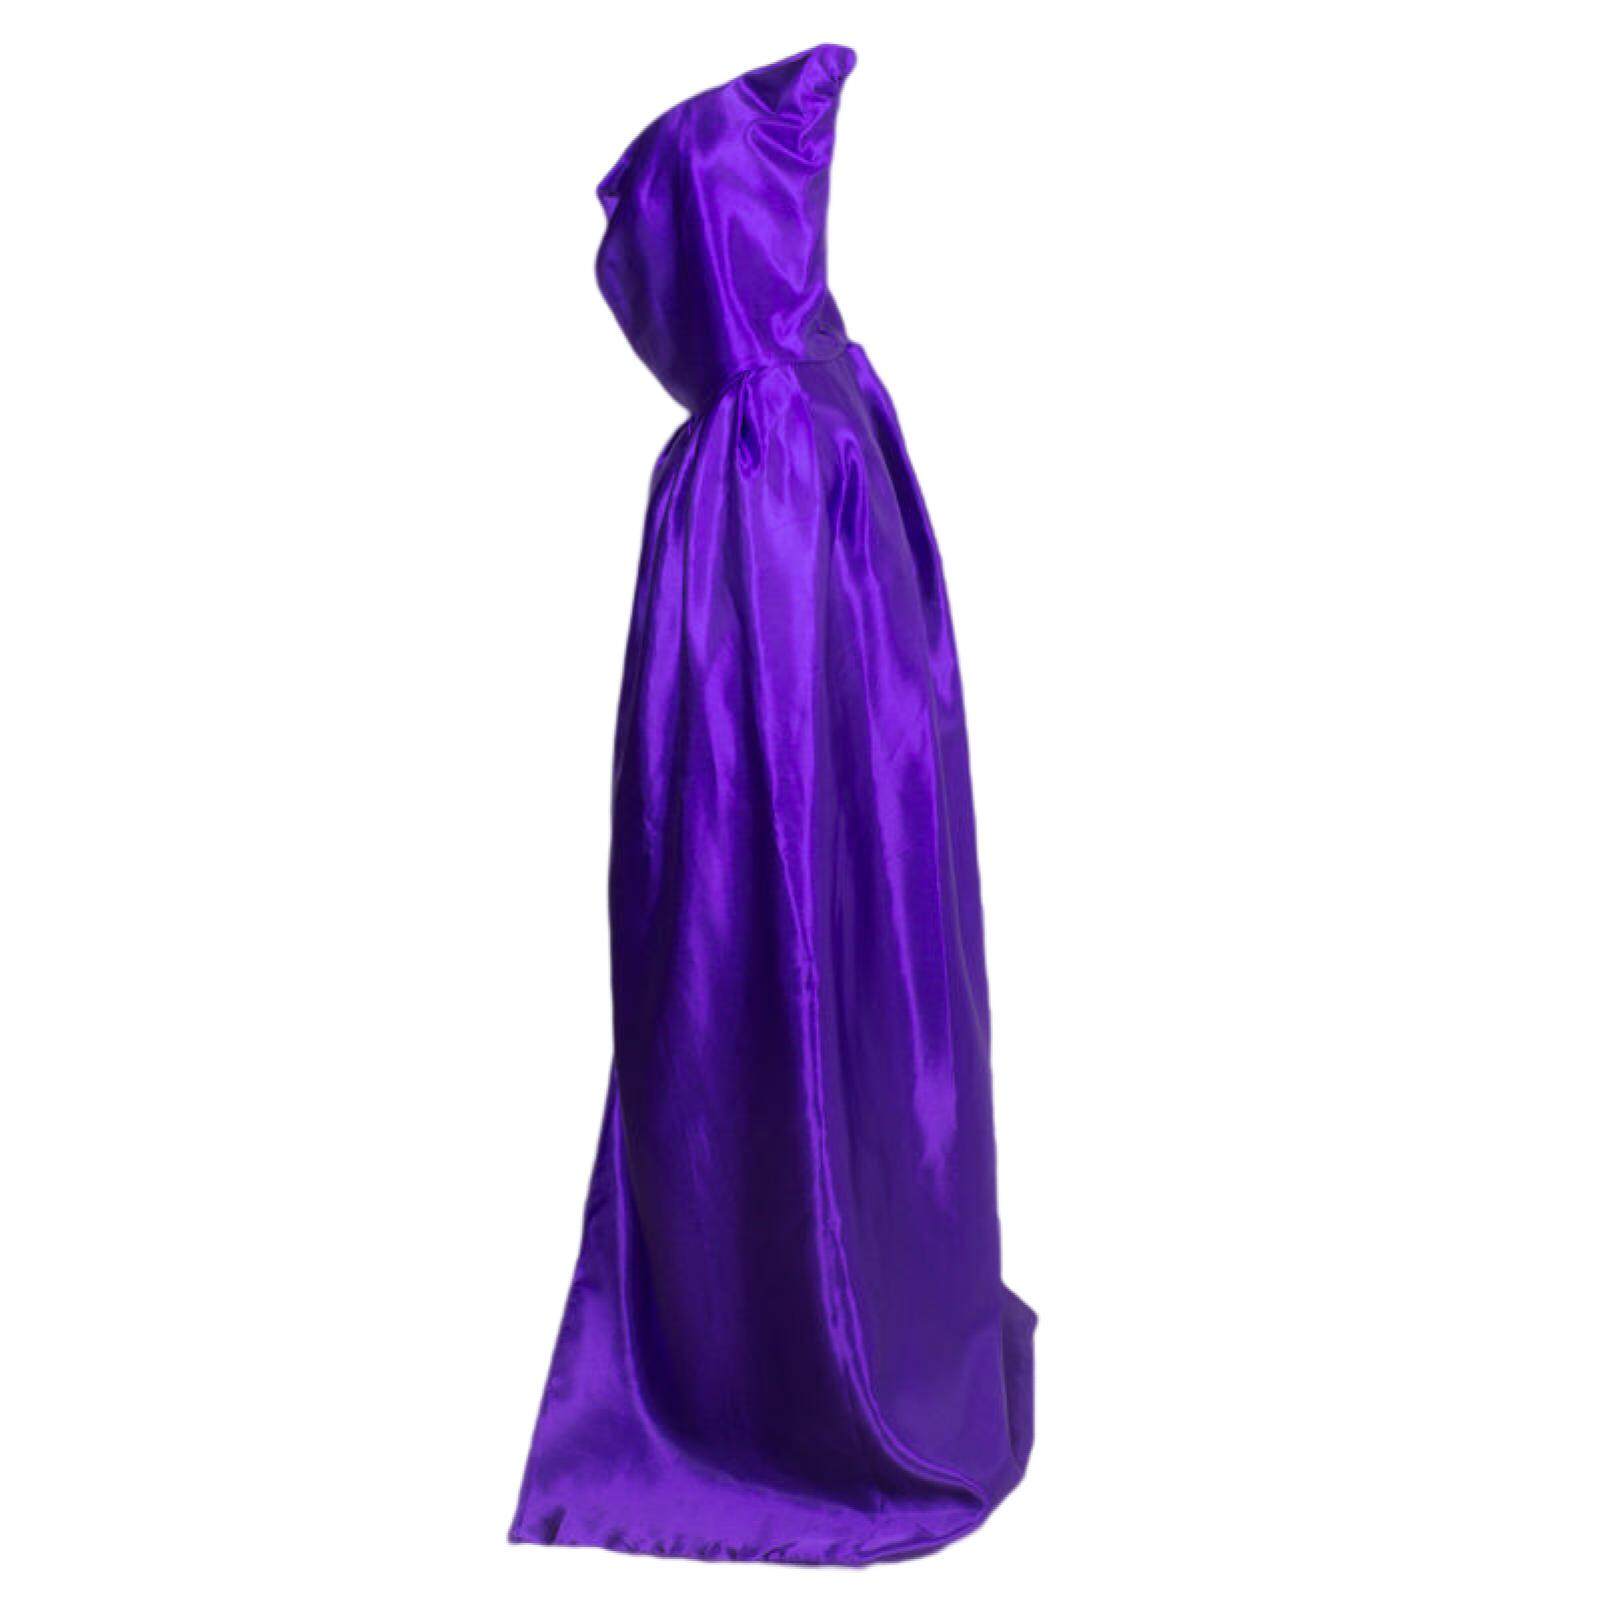 microgood Halloween Cloak Shiny Hooded Solid Color Full Length Men Women